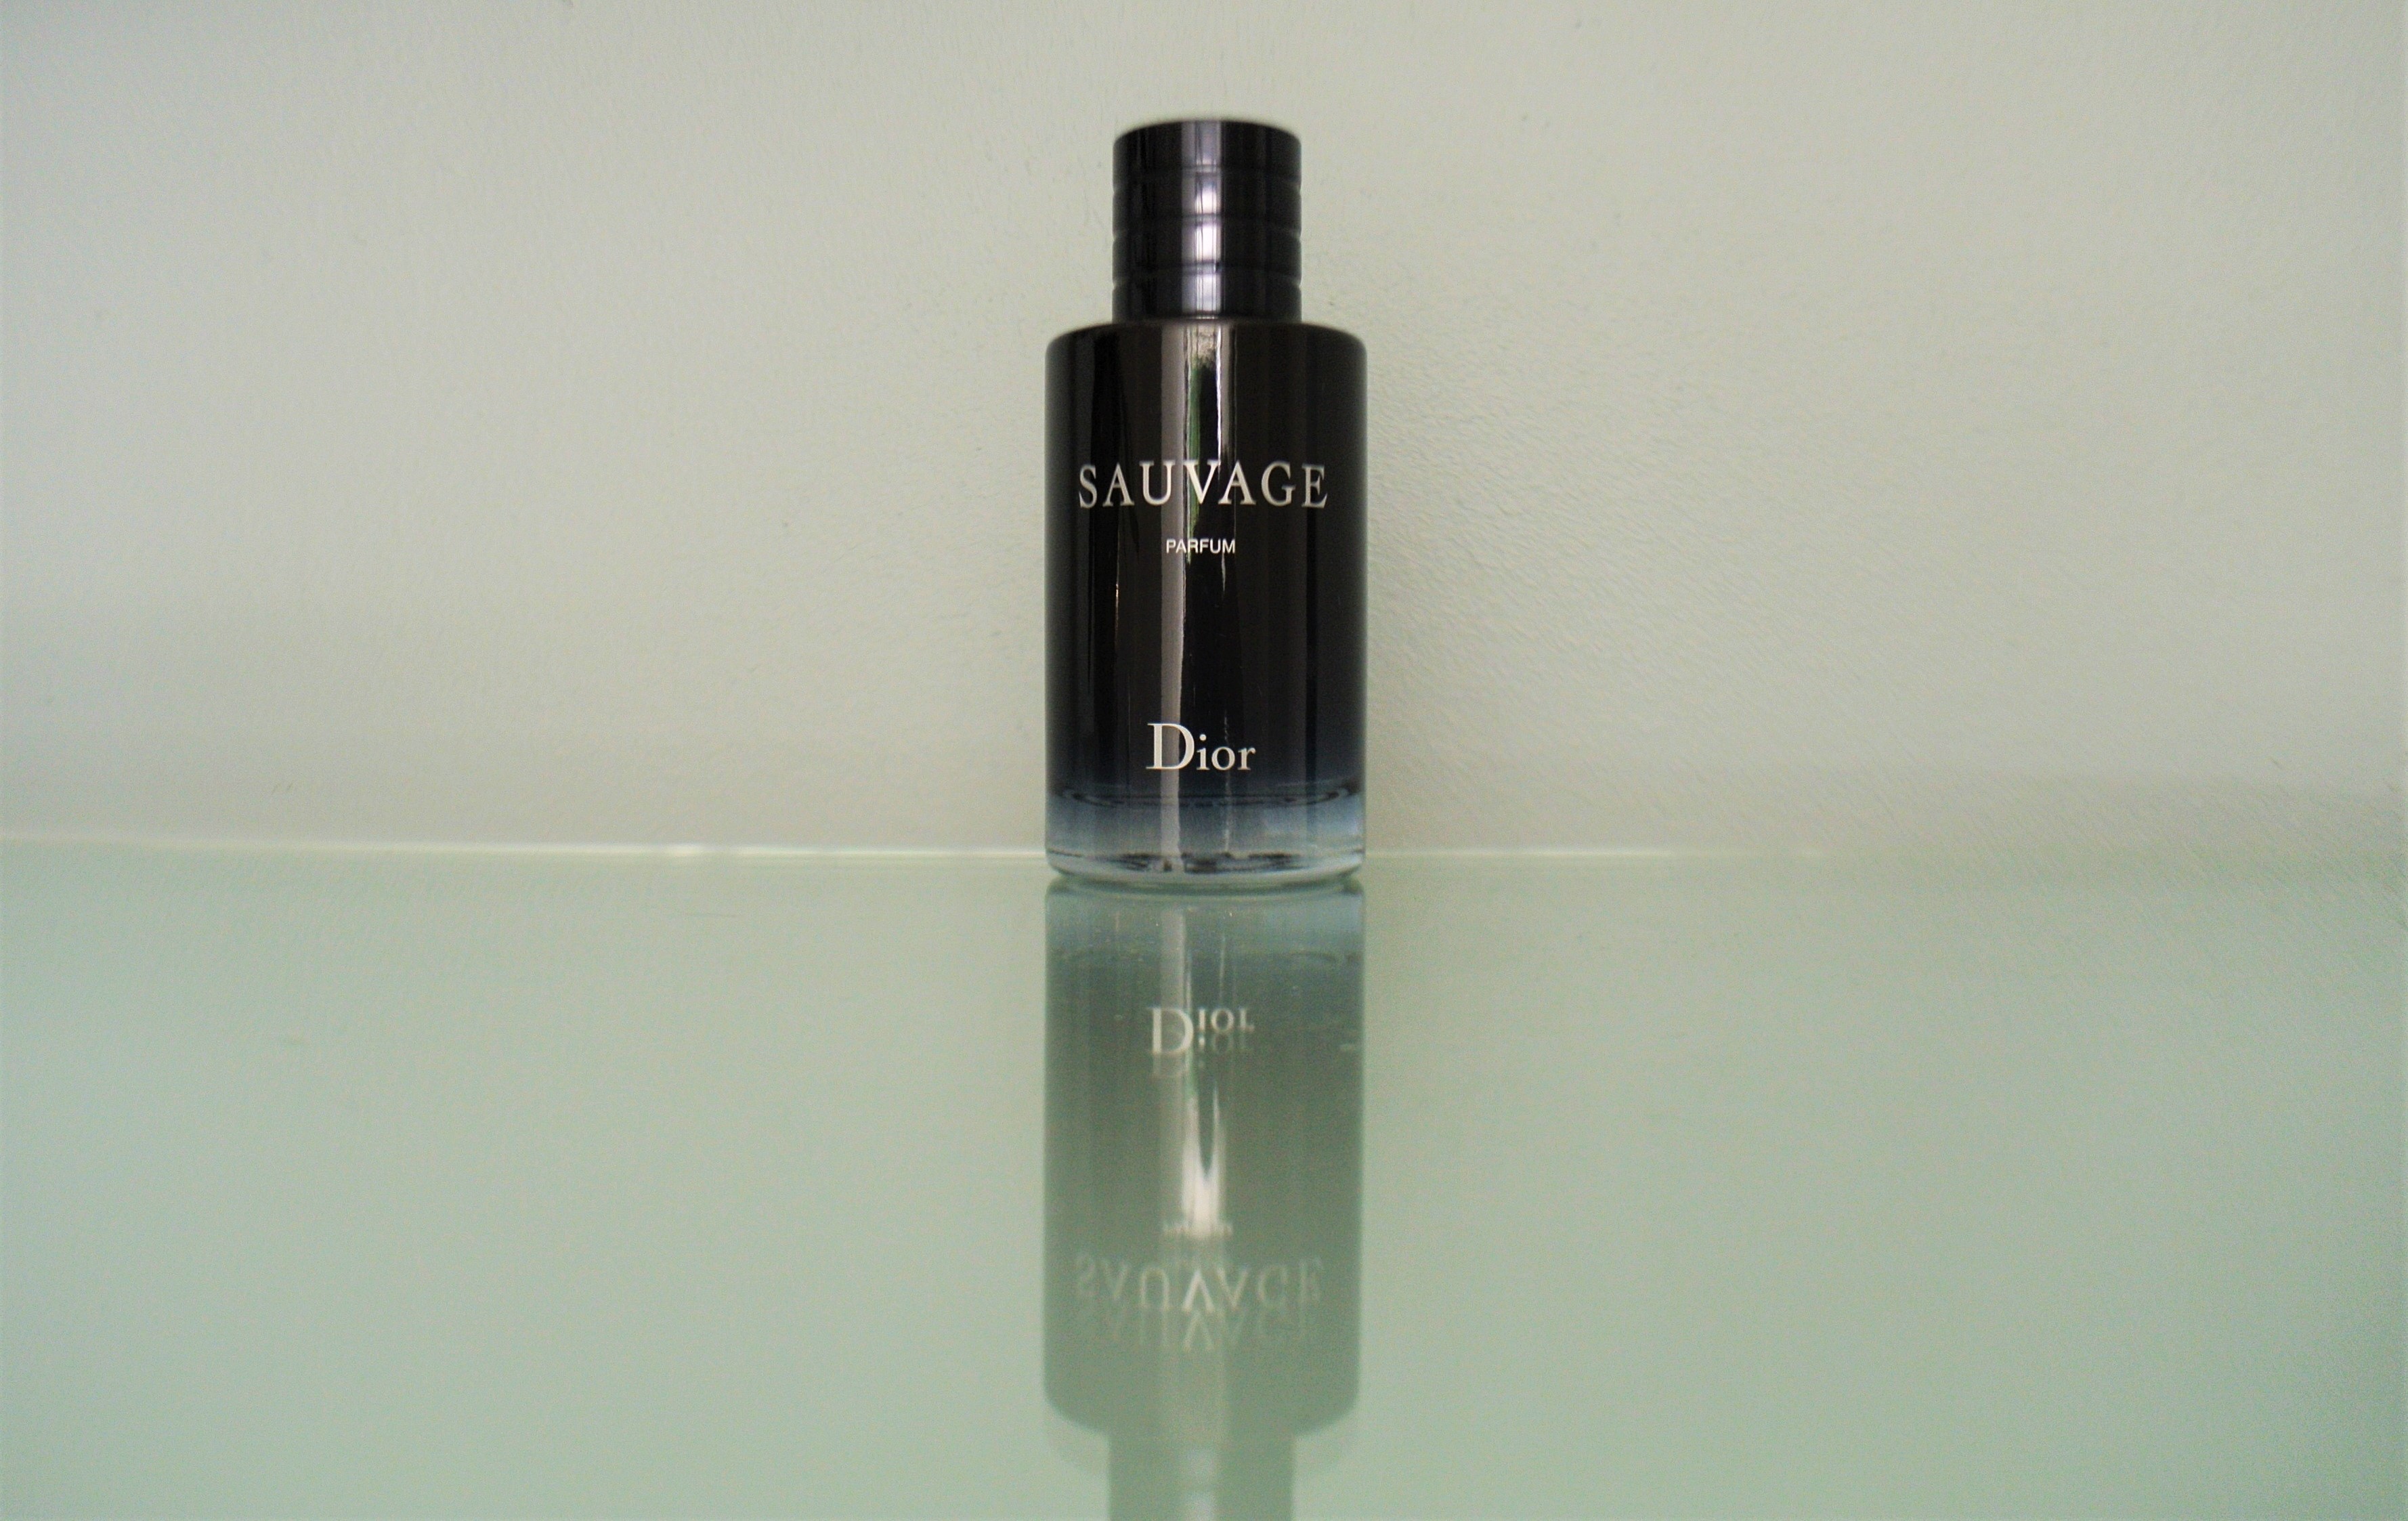 dior sauvage parfum 2019 review